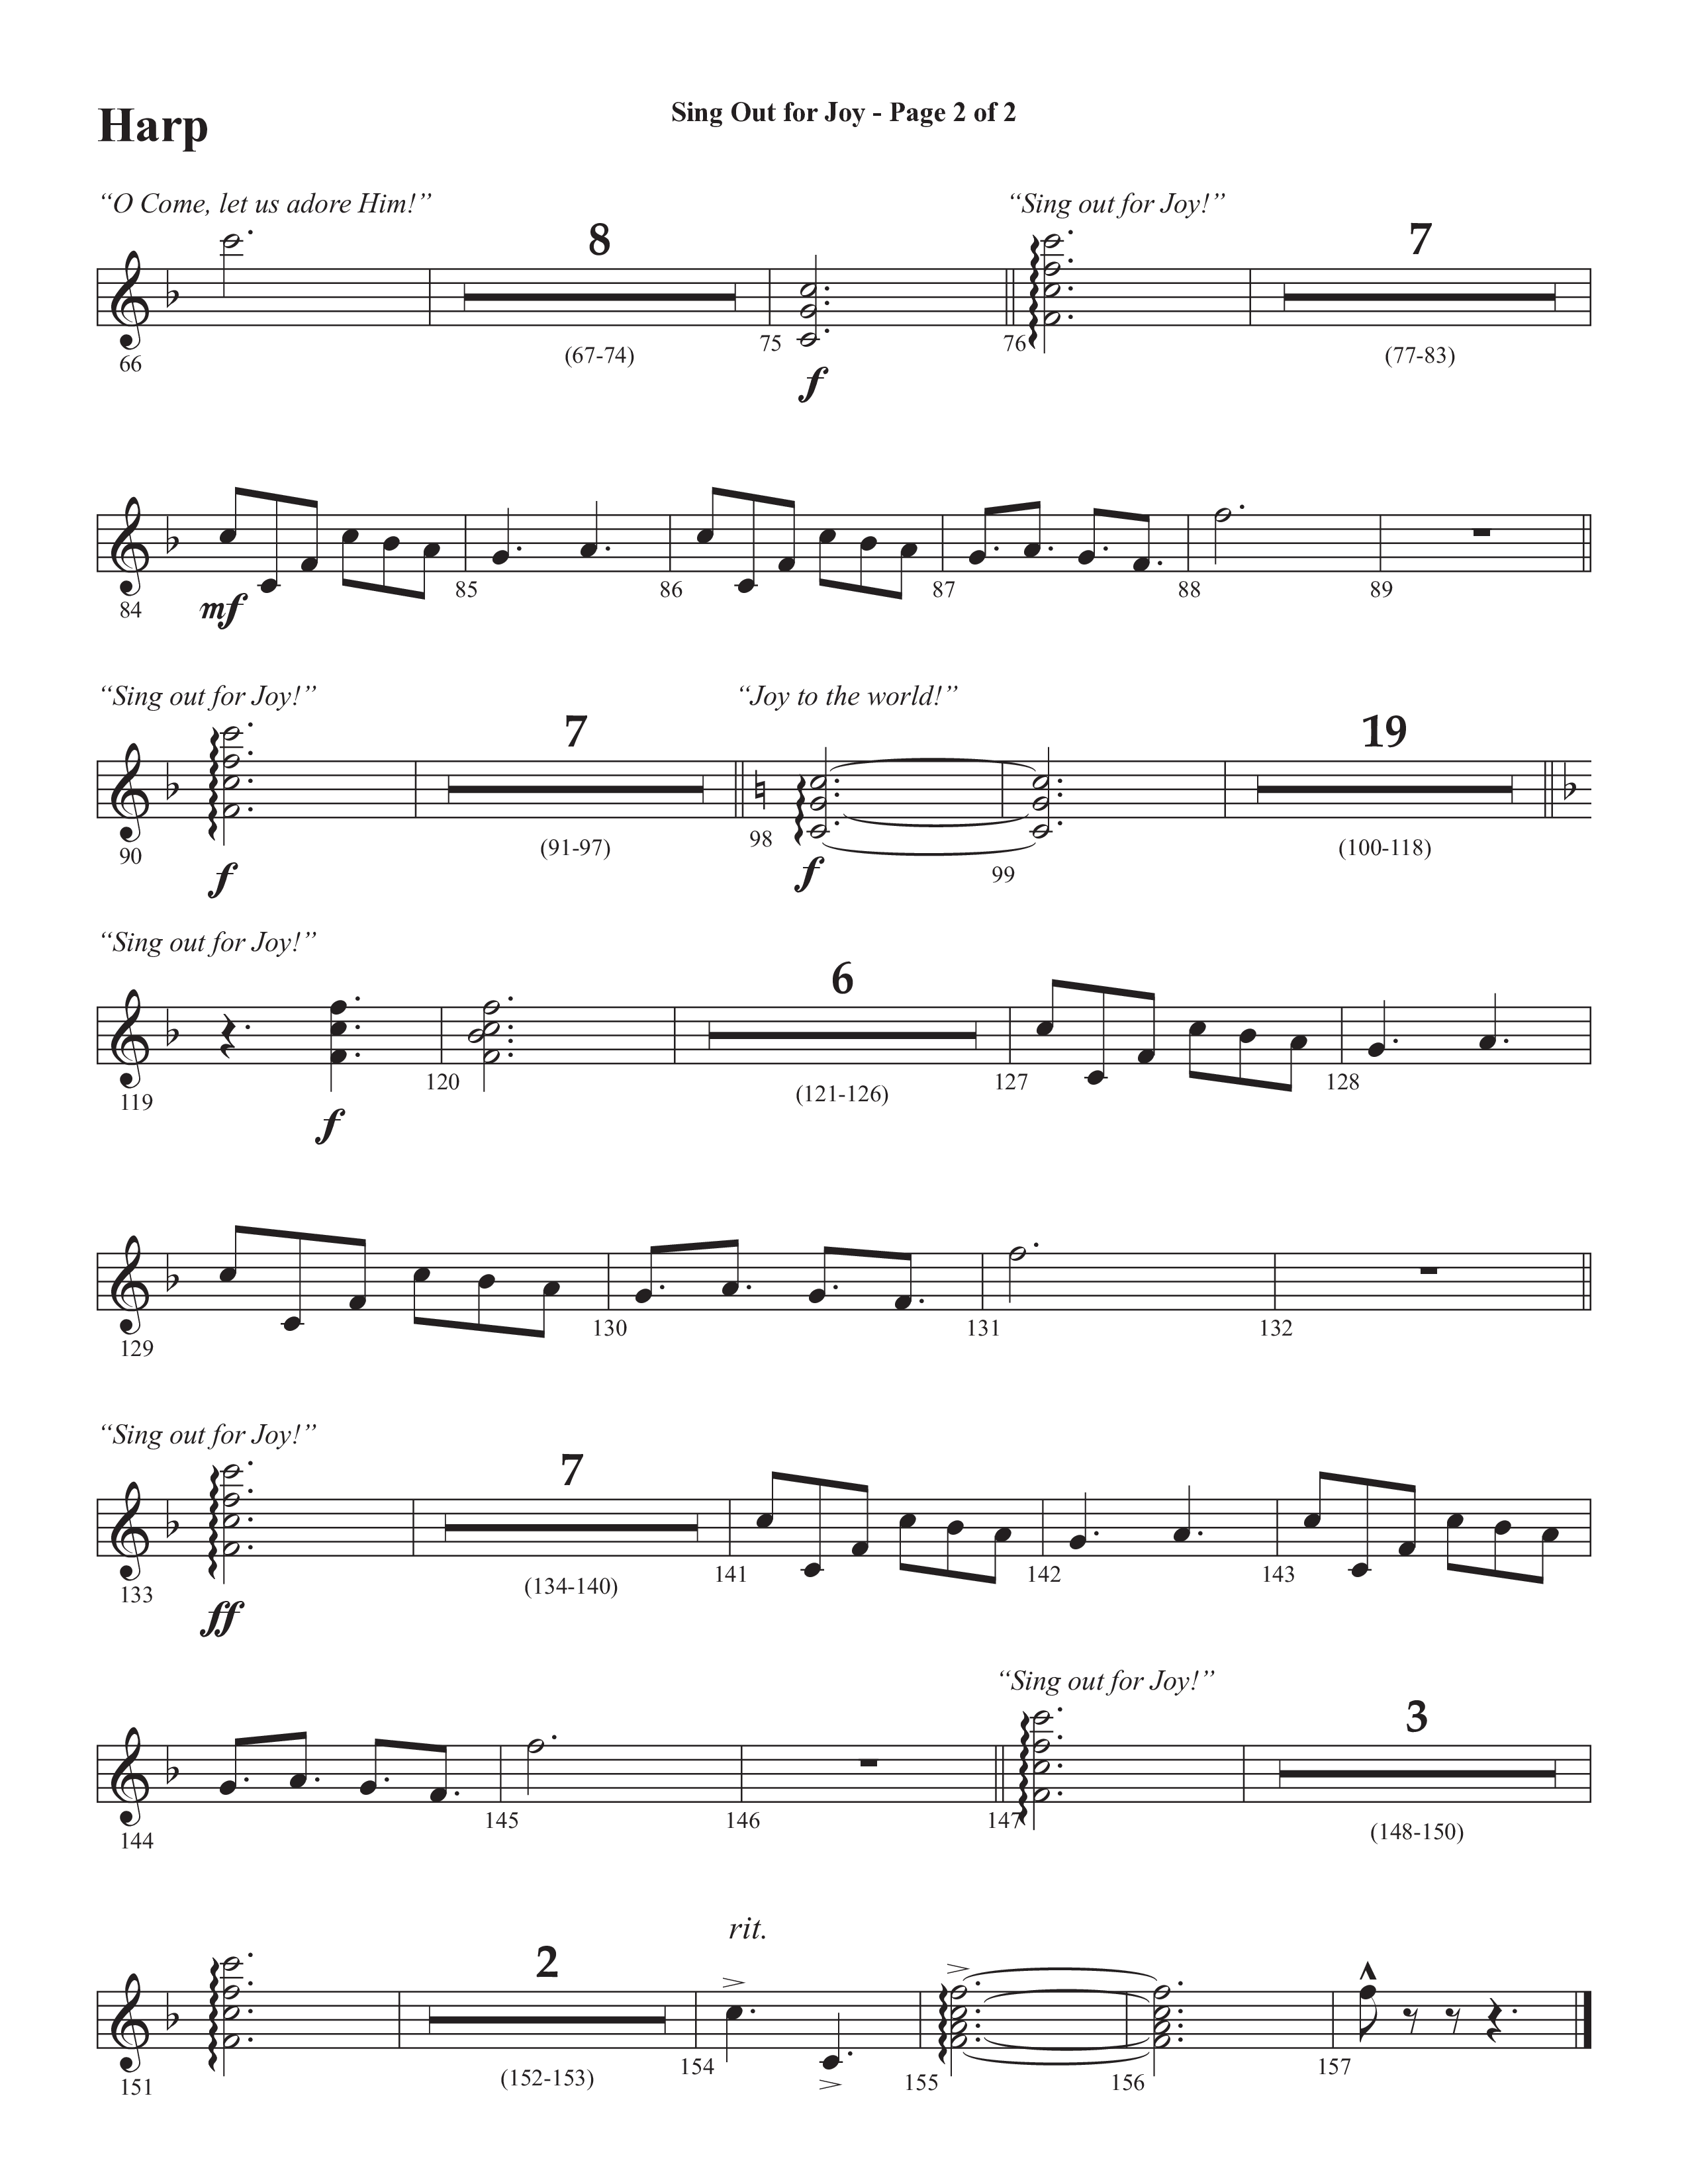 Sing Out For Joy (Choral Anthem SATB) Harp (Semsen Music / Arr. John Bolin / Orch. Cliff Duren)